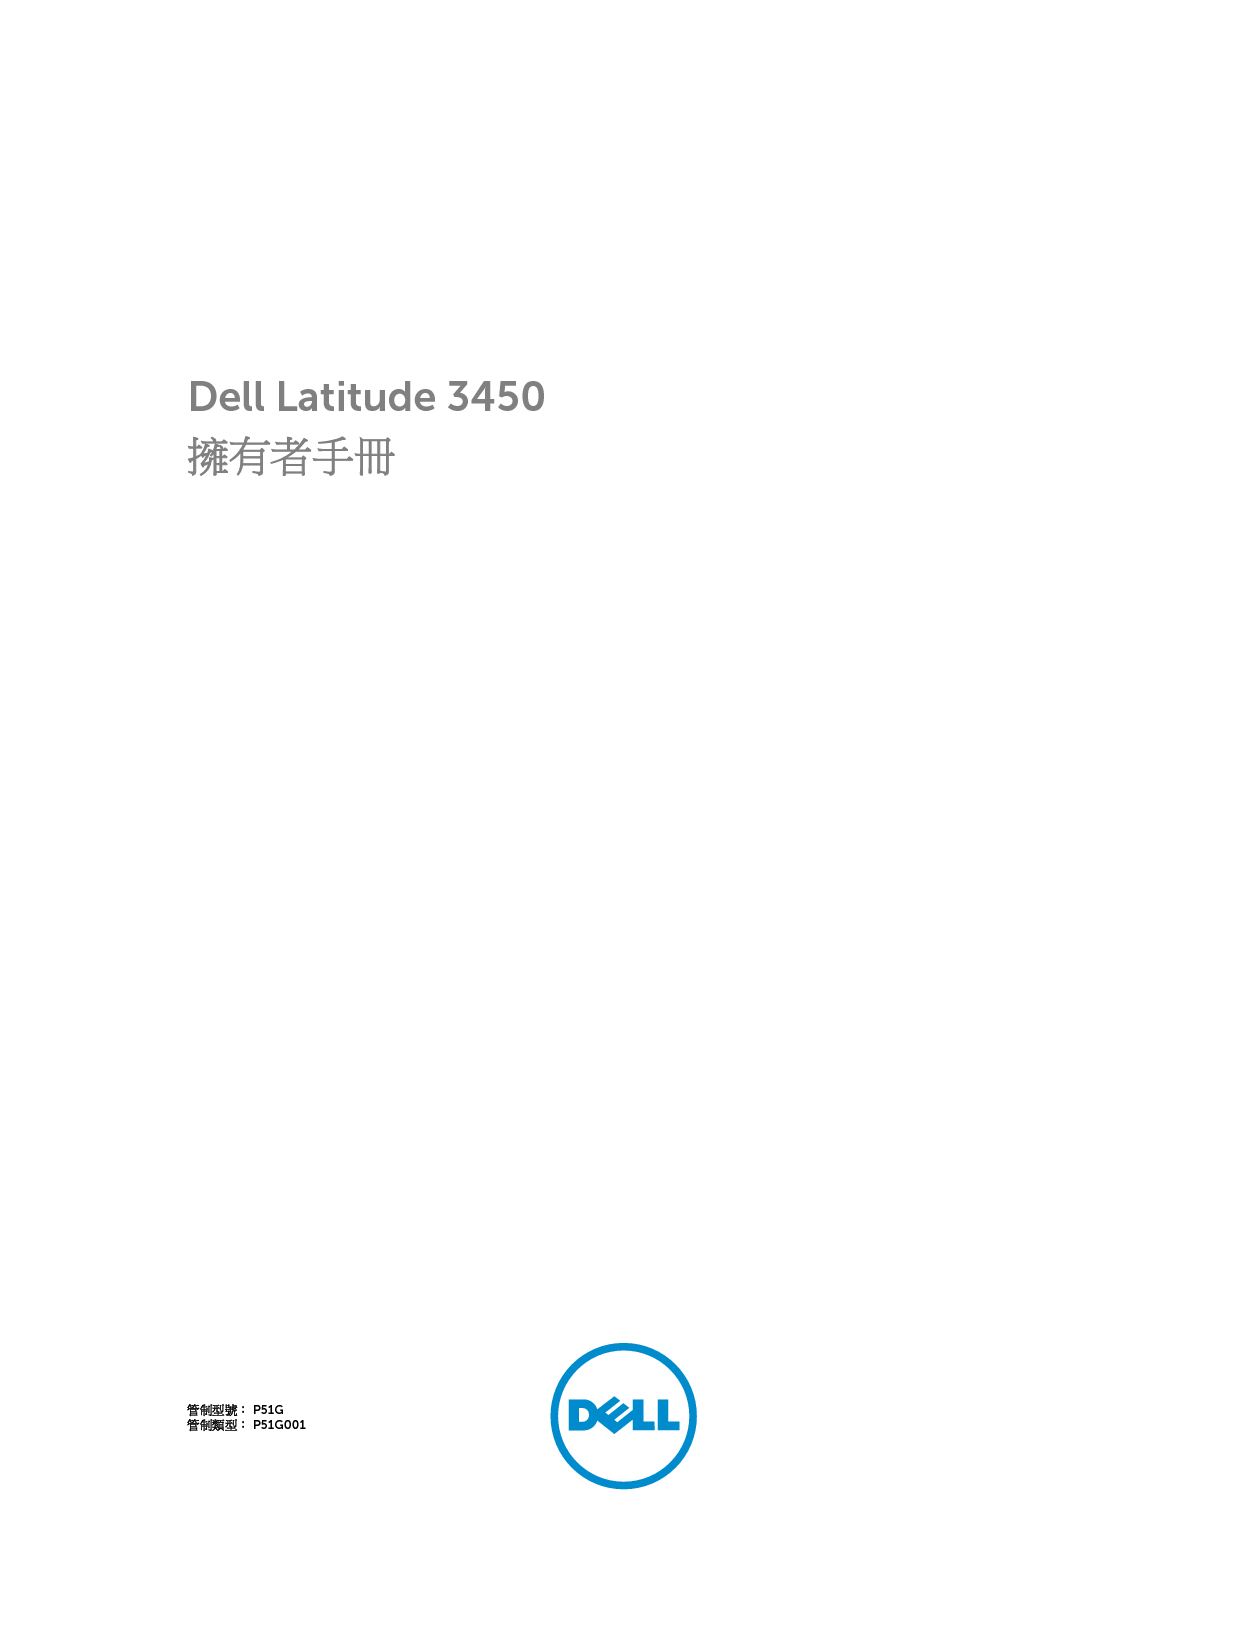 戴尔 Dell Latitude 3450 繁体 用户手册 封面